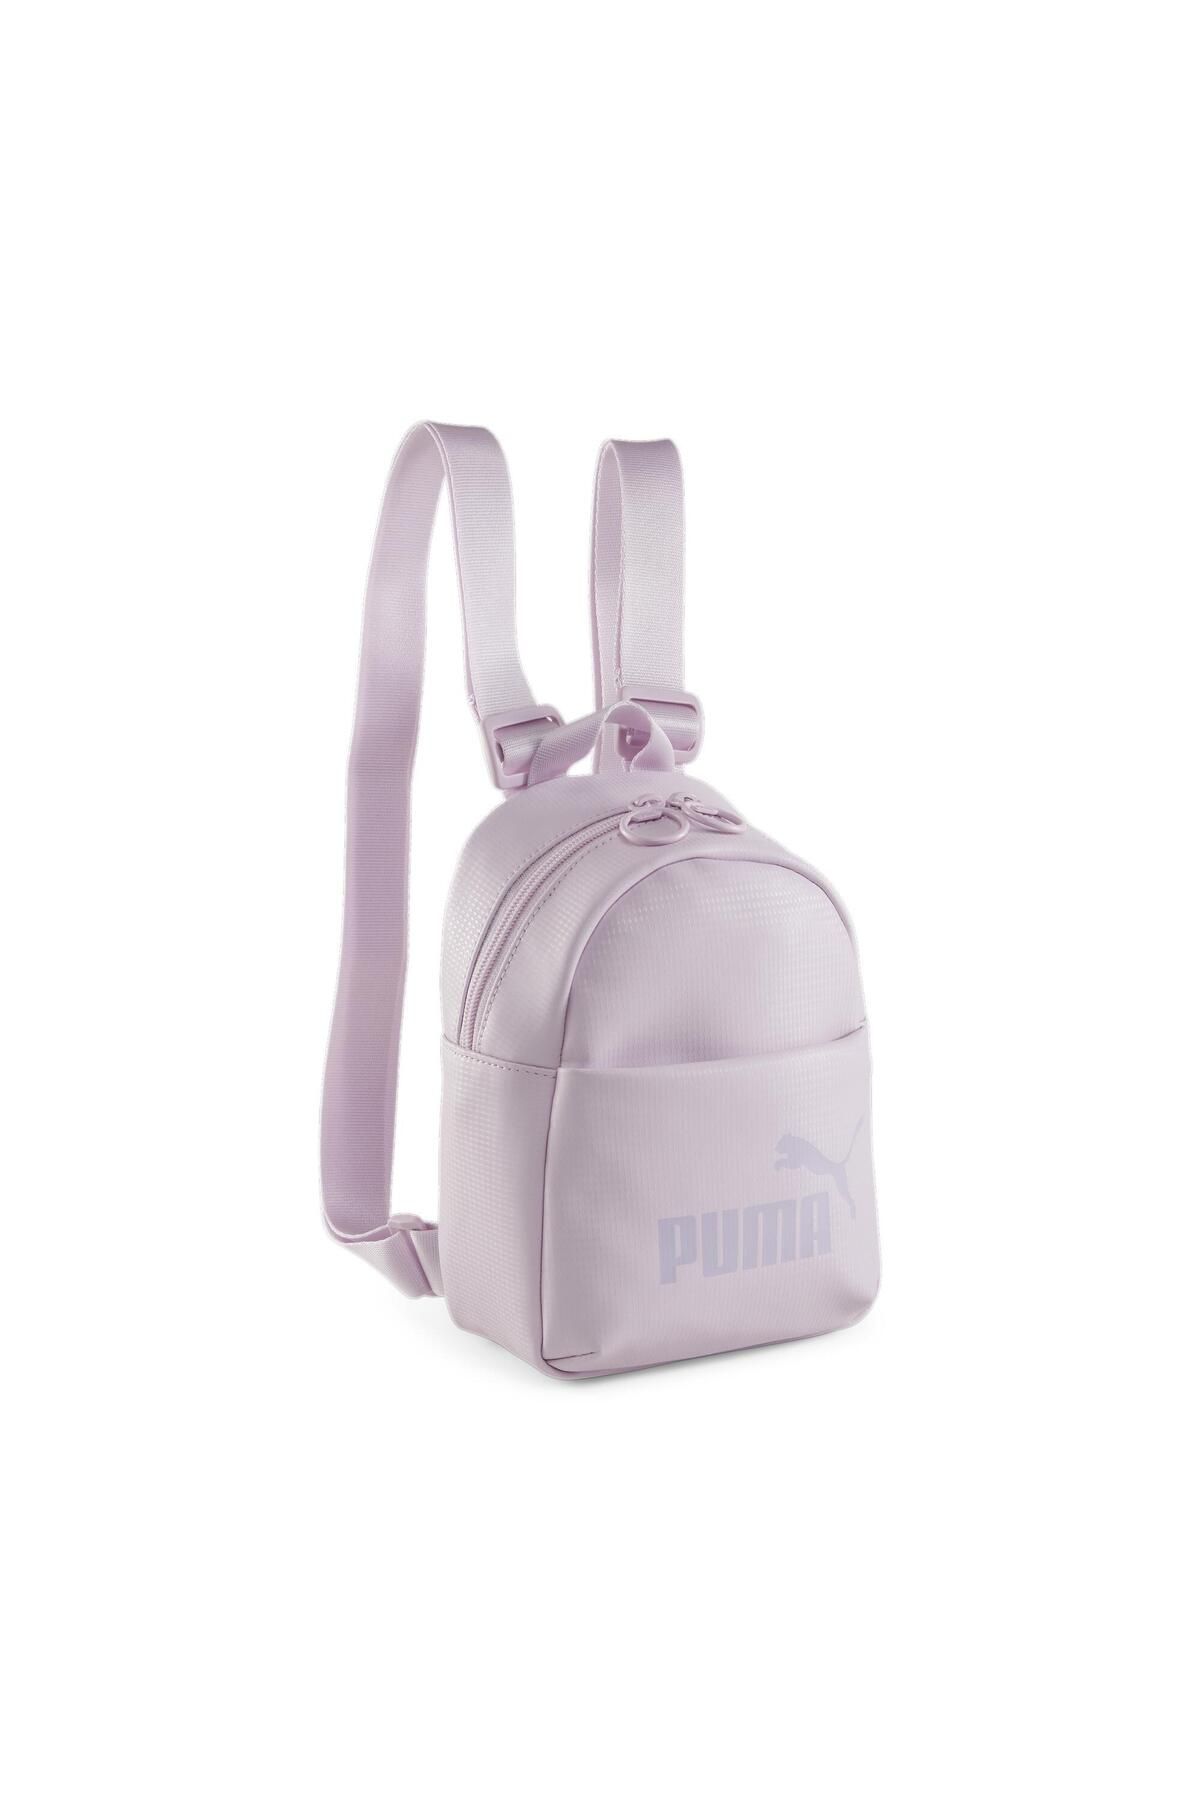 Puma Core Up Minime Backpack Kadın Sırt Çantası